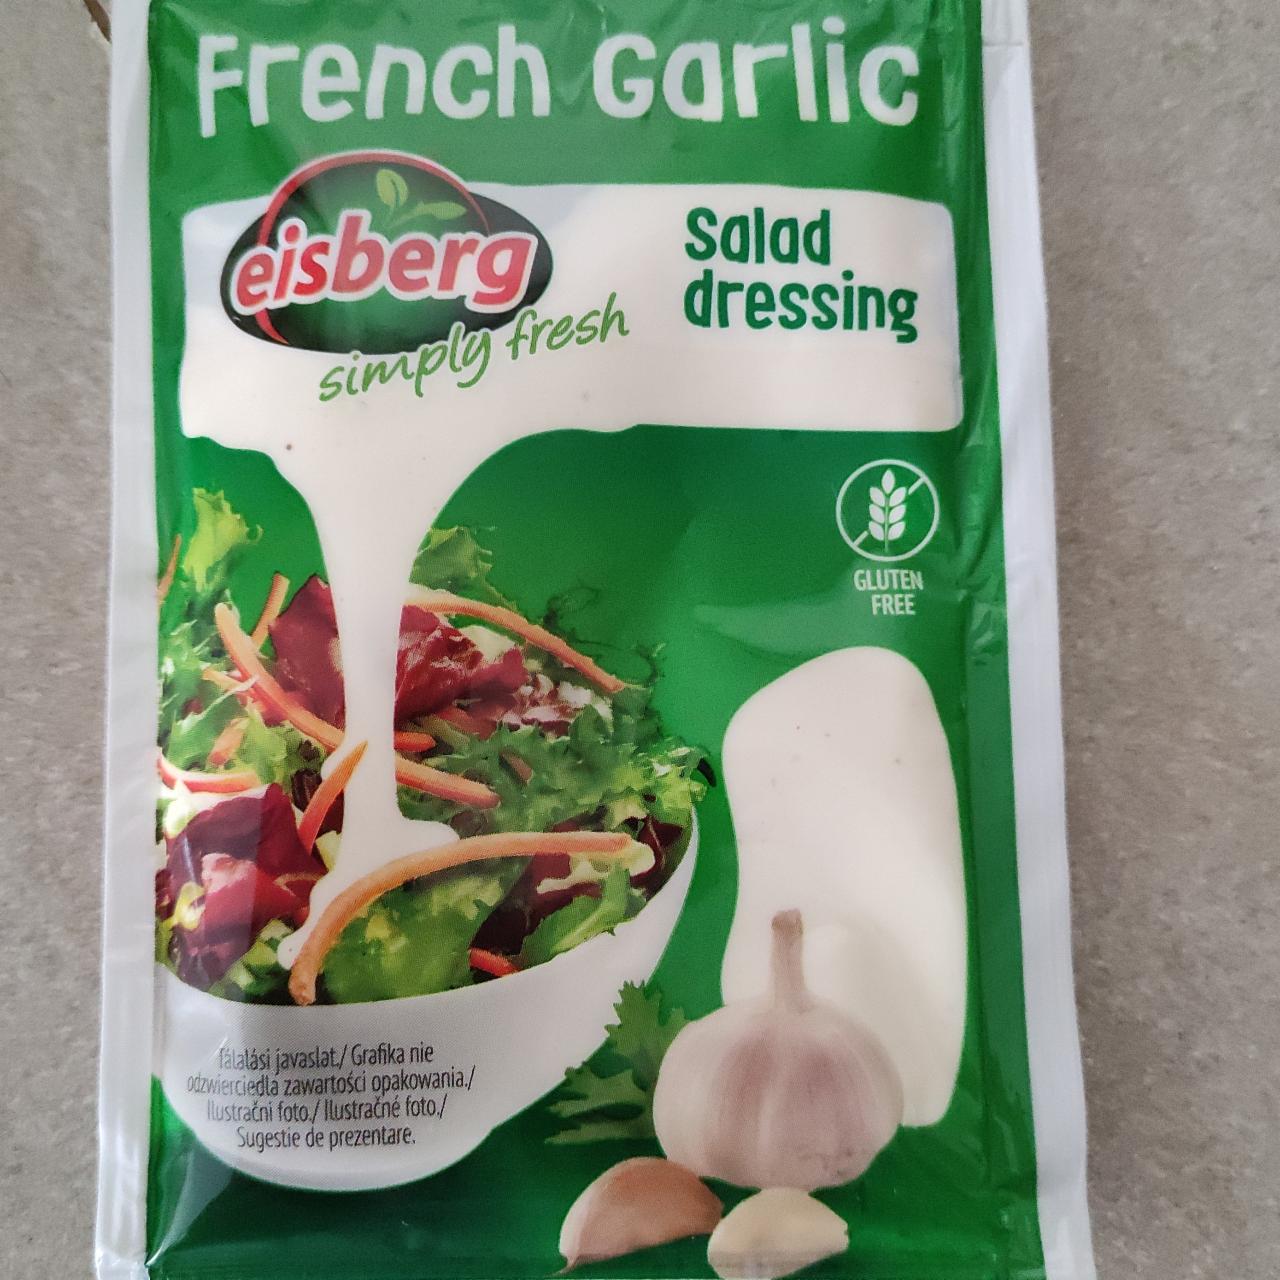 Képek - French garlic salad dressing Eisberg